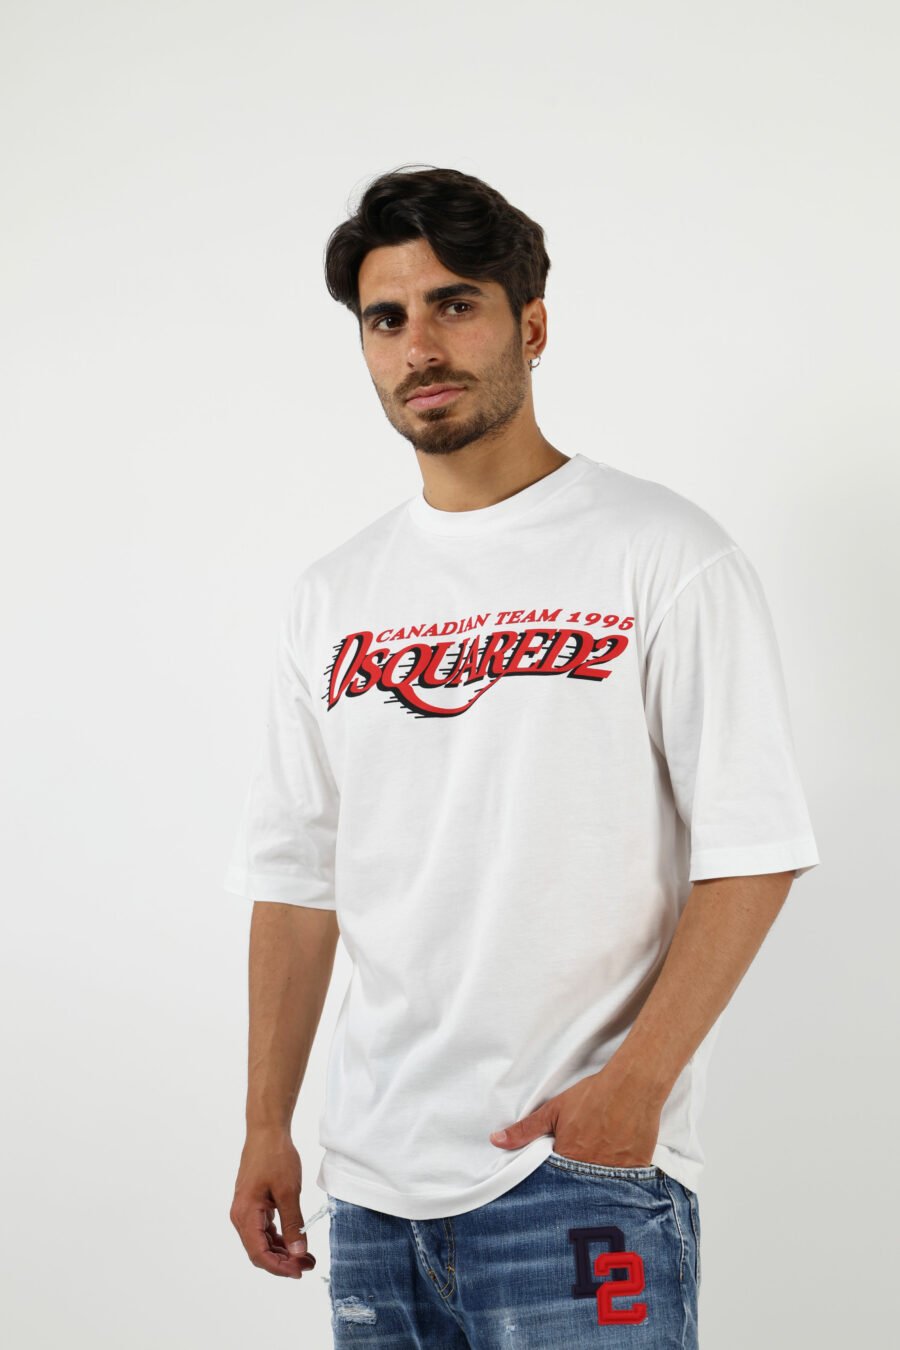 Camiseta blanca con maxilogo "canadian team 1995" - 8054148301507 1 1